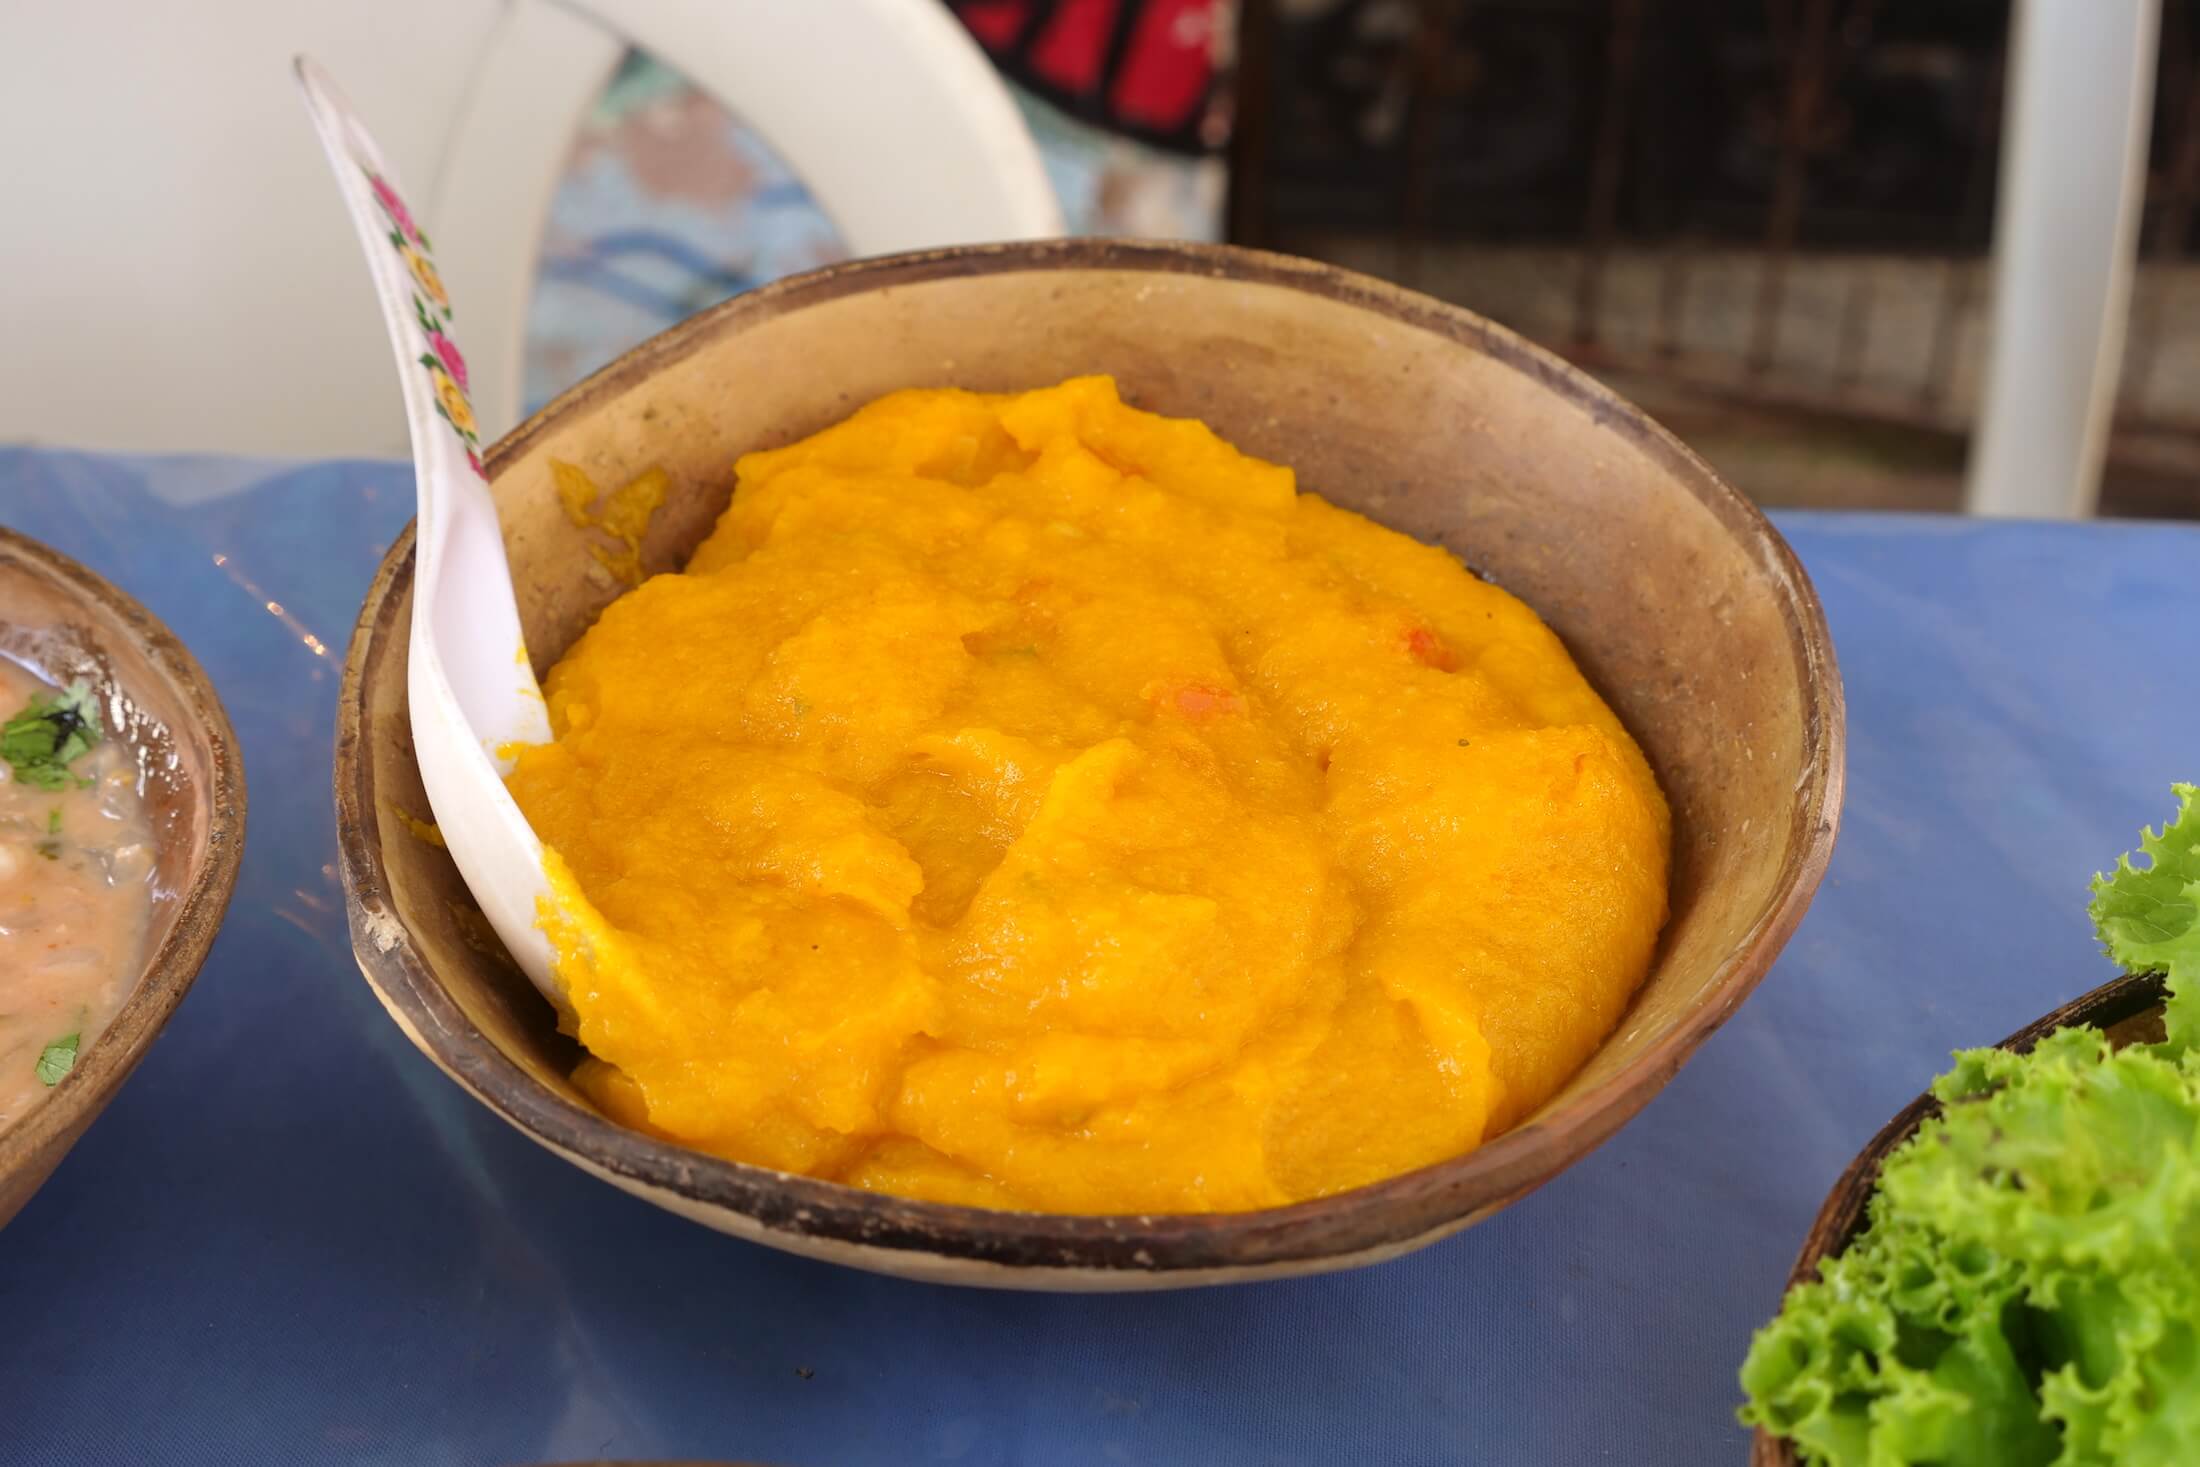 amazing and creamy Pirau, Dona Suzana makes a wonderful bowl of this mash of beans and cassava